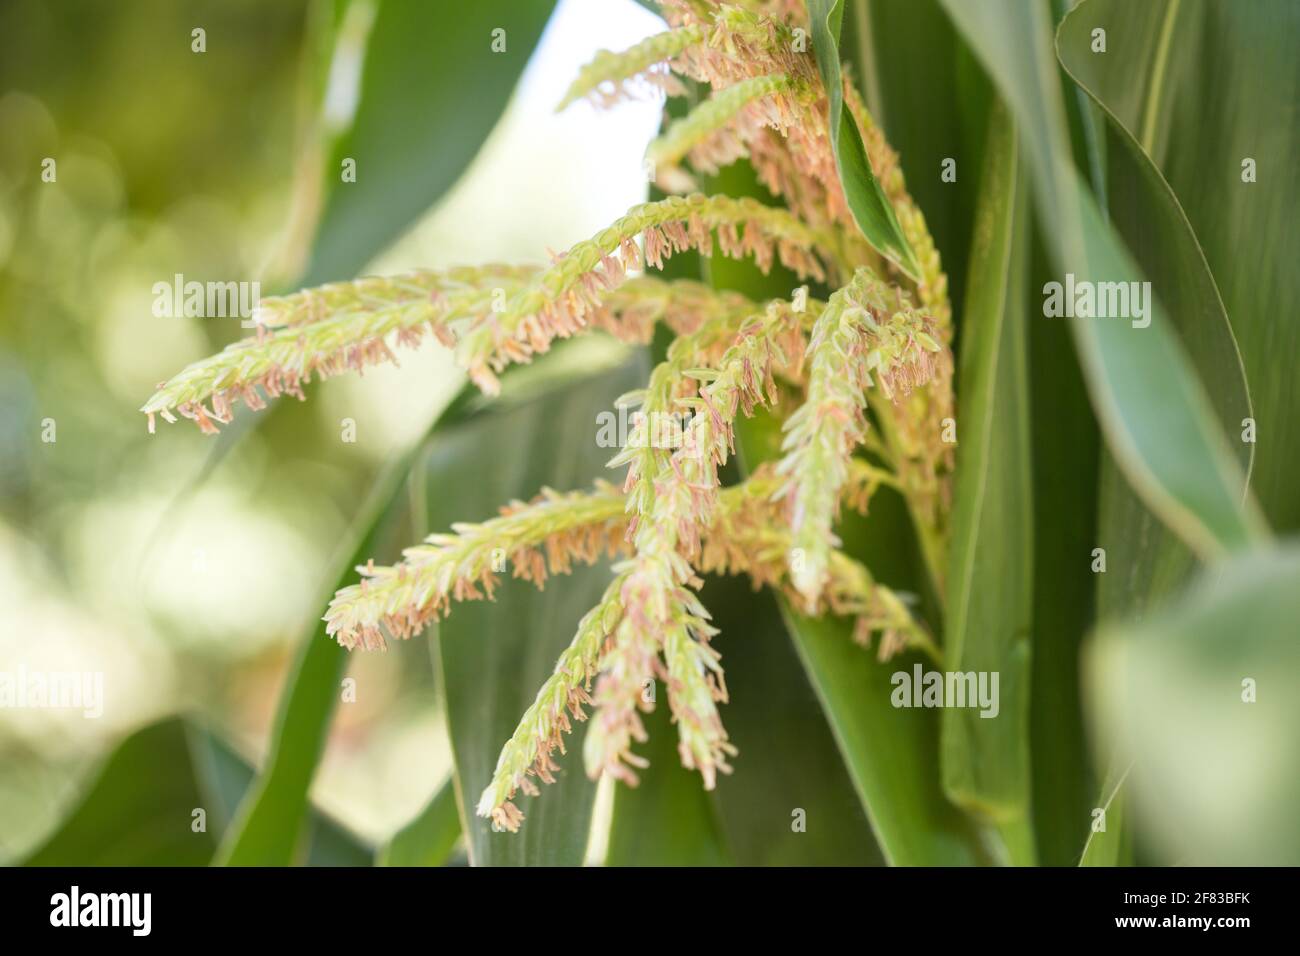 Sweet corn male flower stems. Stock Photo